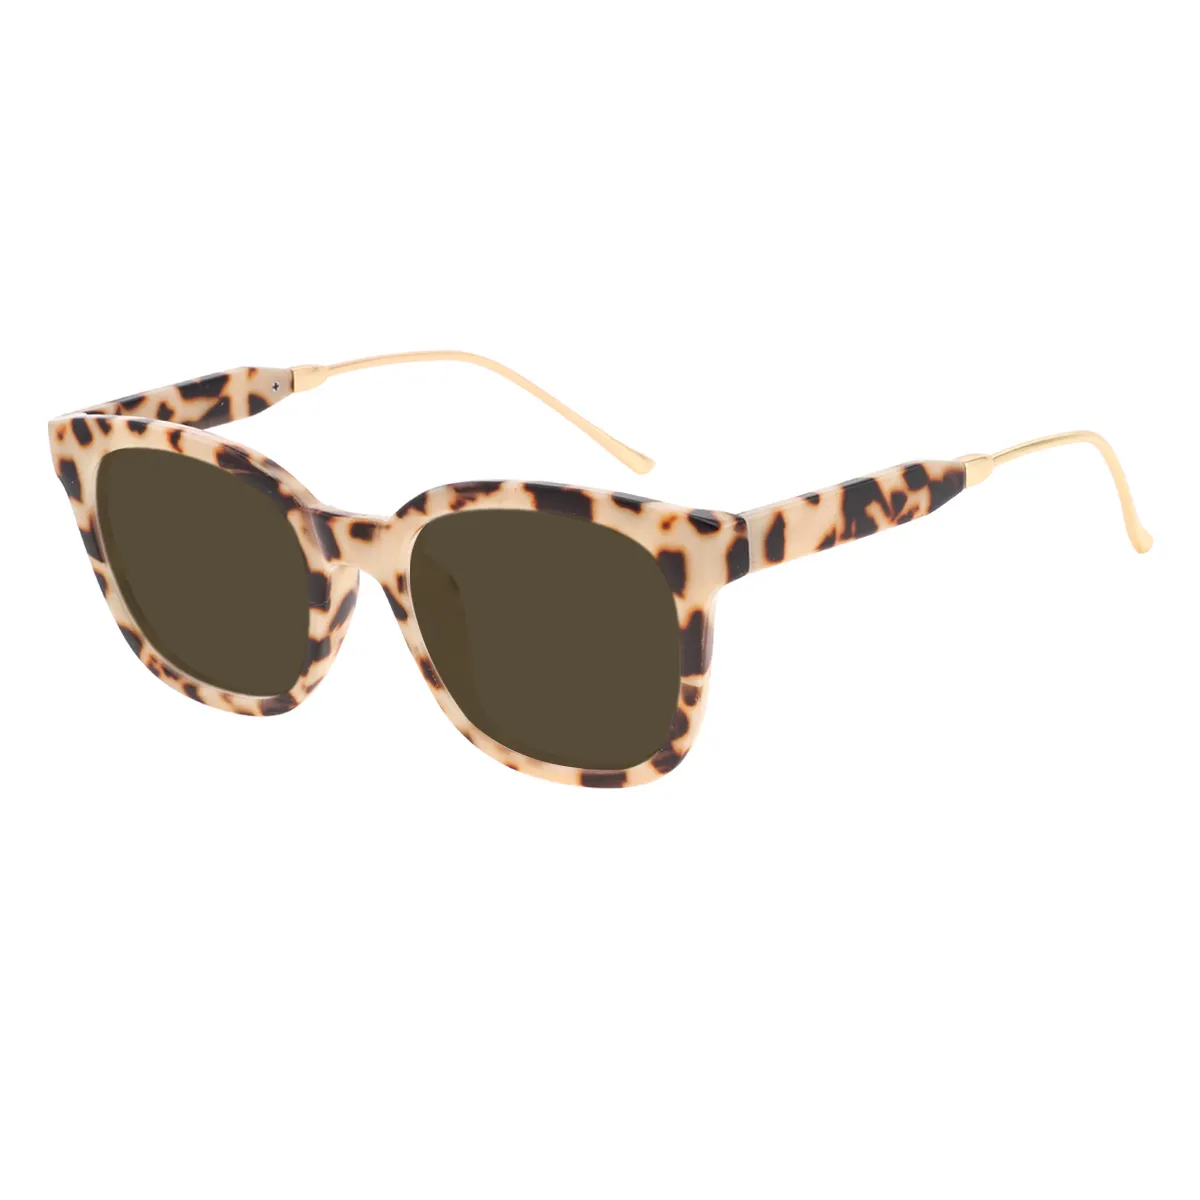 Werner - Square Leopard Sunglasses for Women